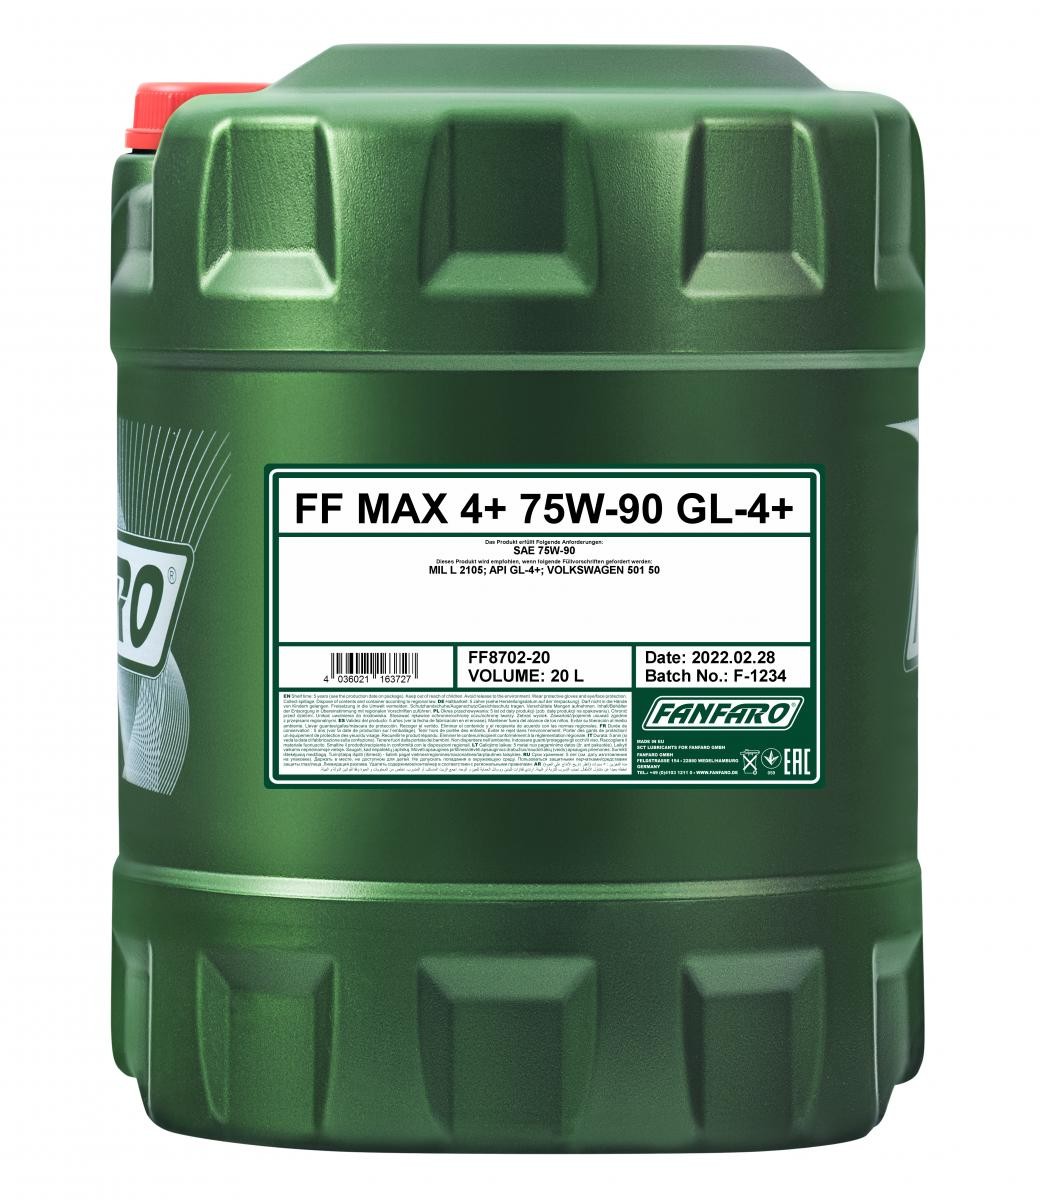 FANFARO MAX 4+ FF8702-20 Manual Transmission Oil Capacity: 20l, 75W-90